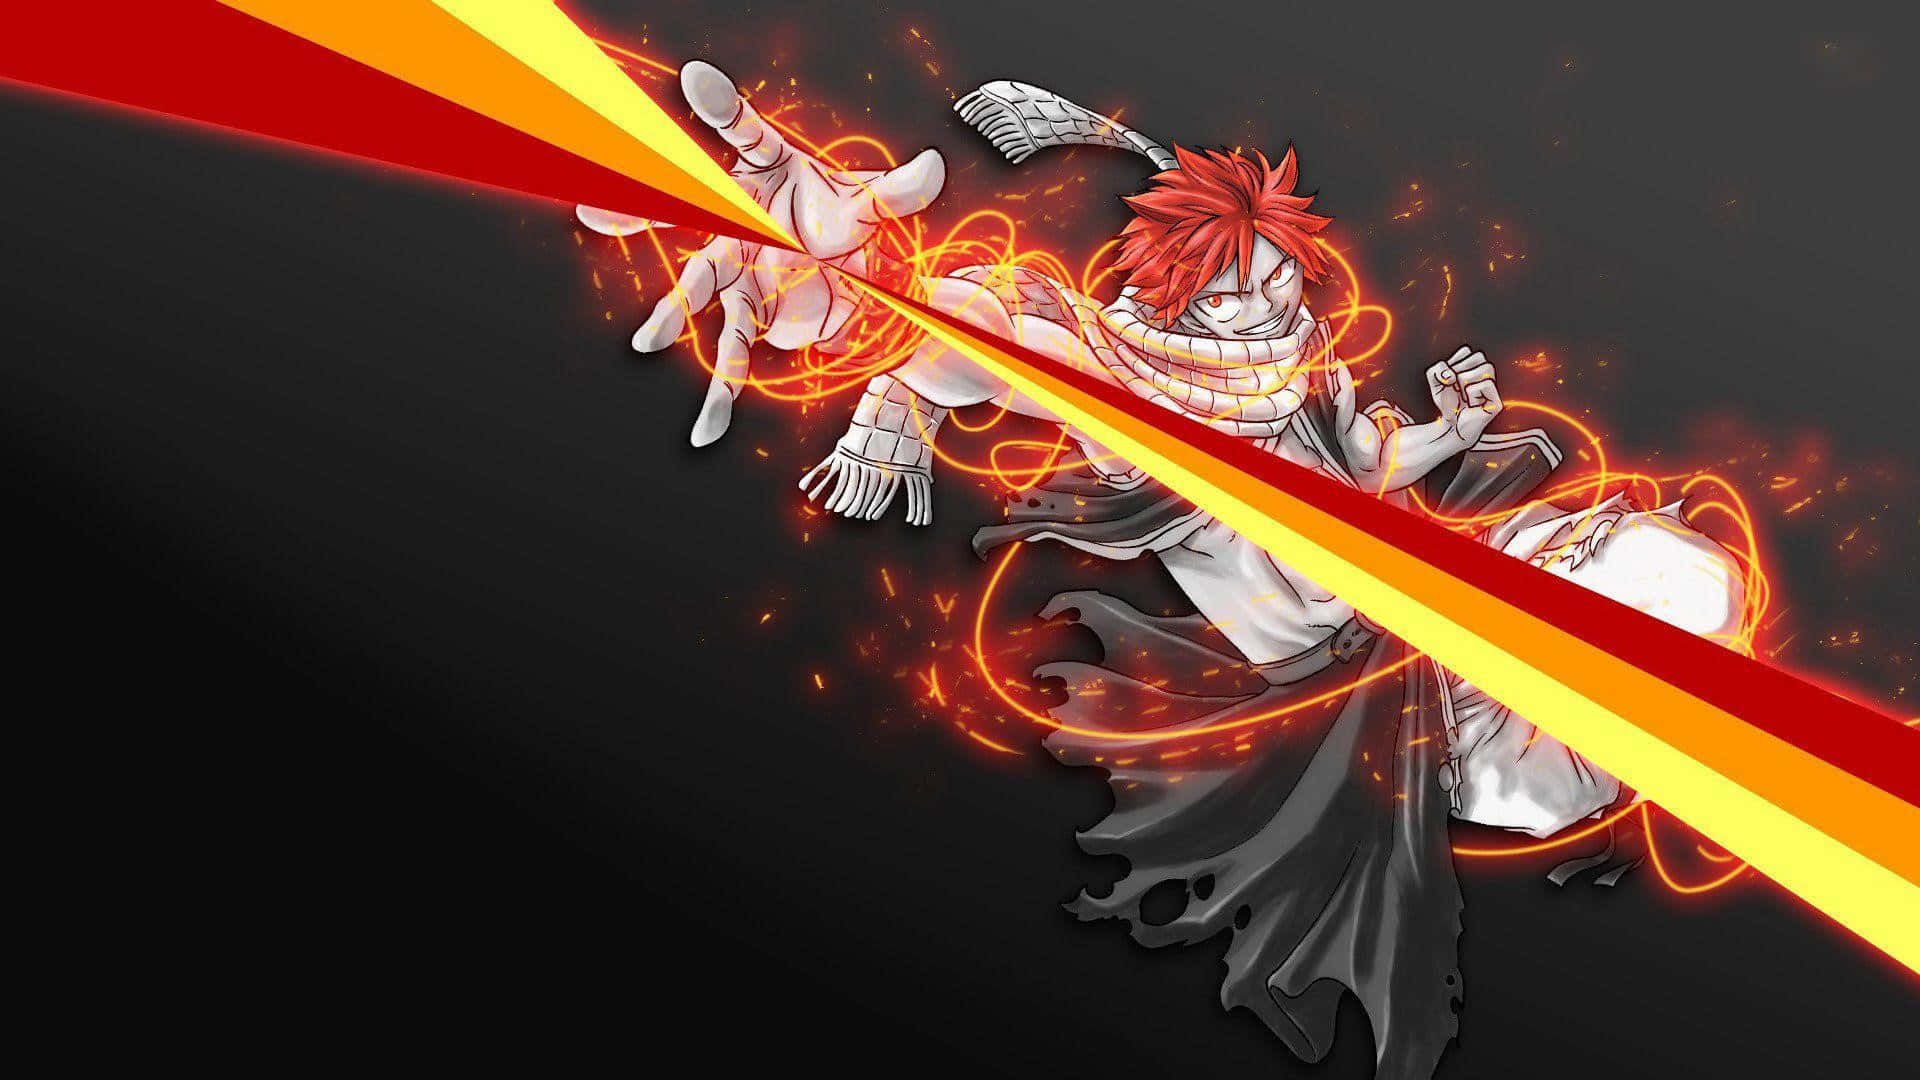 Fiery Natsu Dragneel Unleashing His Dragon Force Power Wallpaper